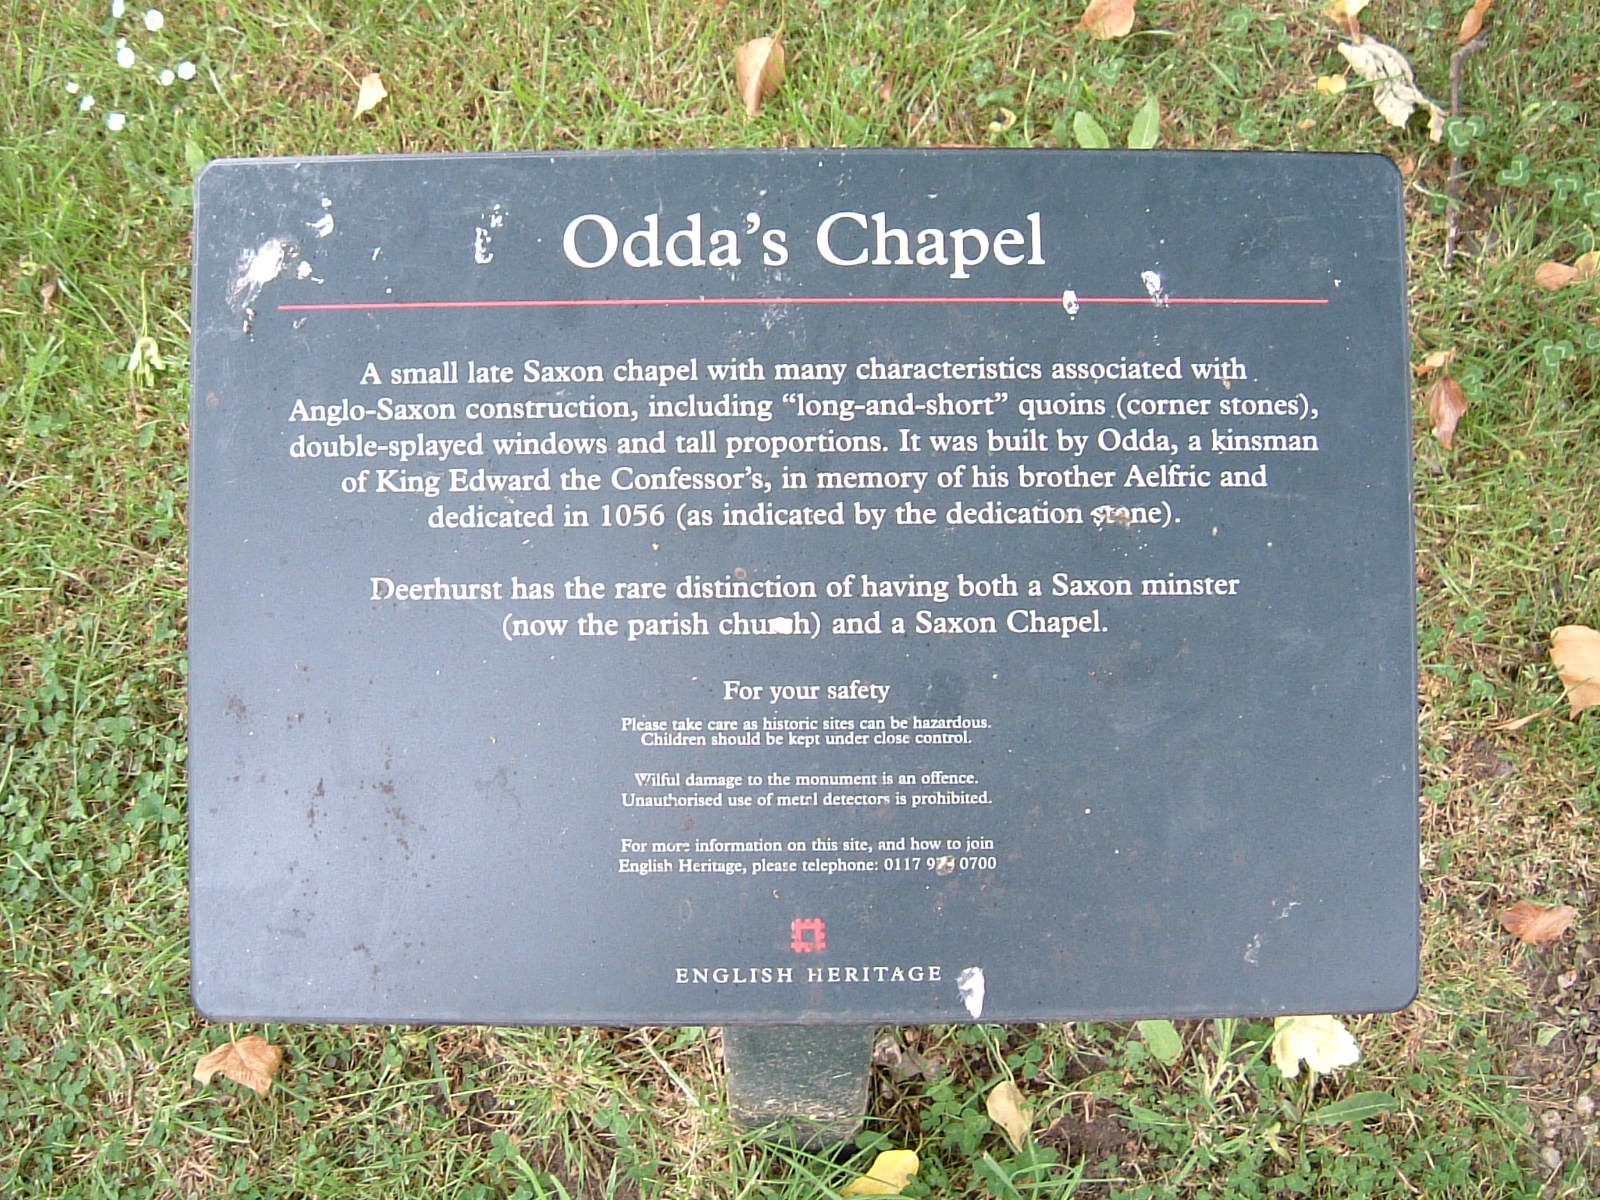 The sign outside Odda's Chapel